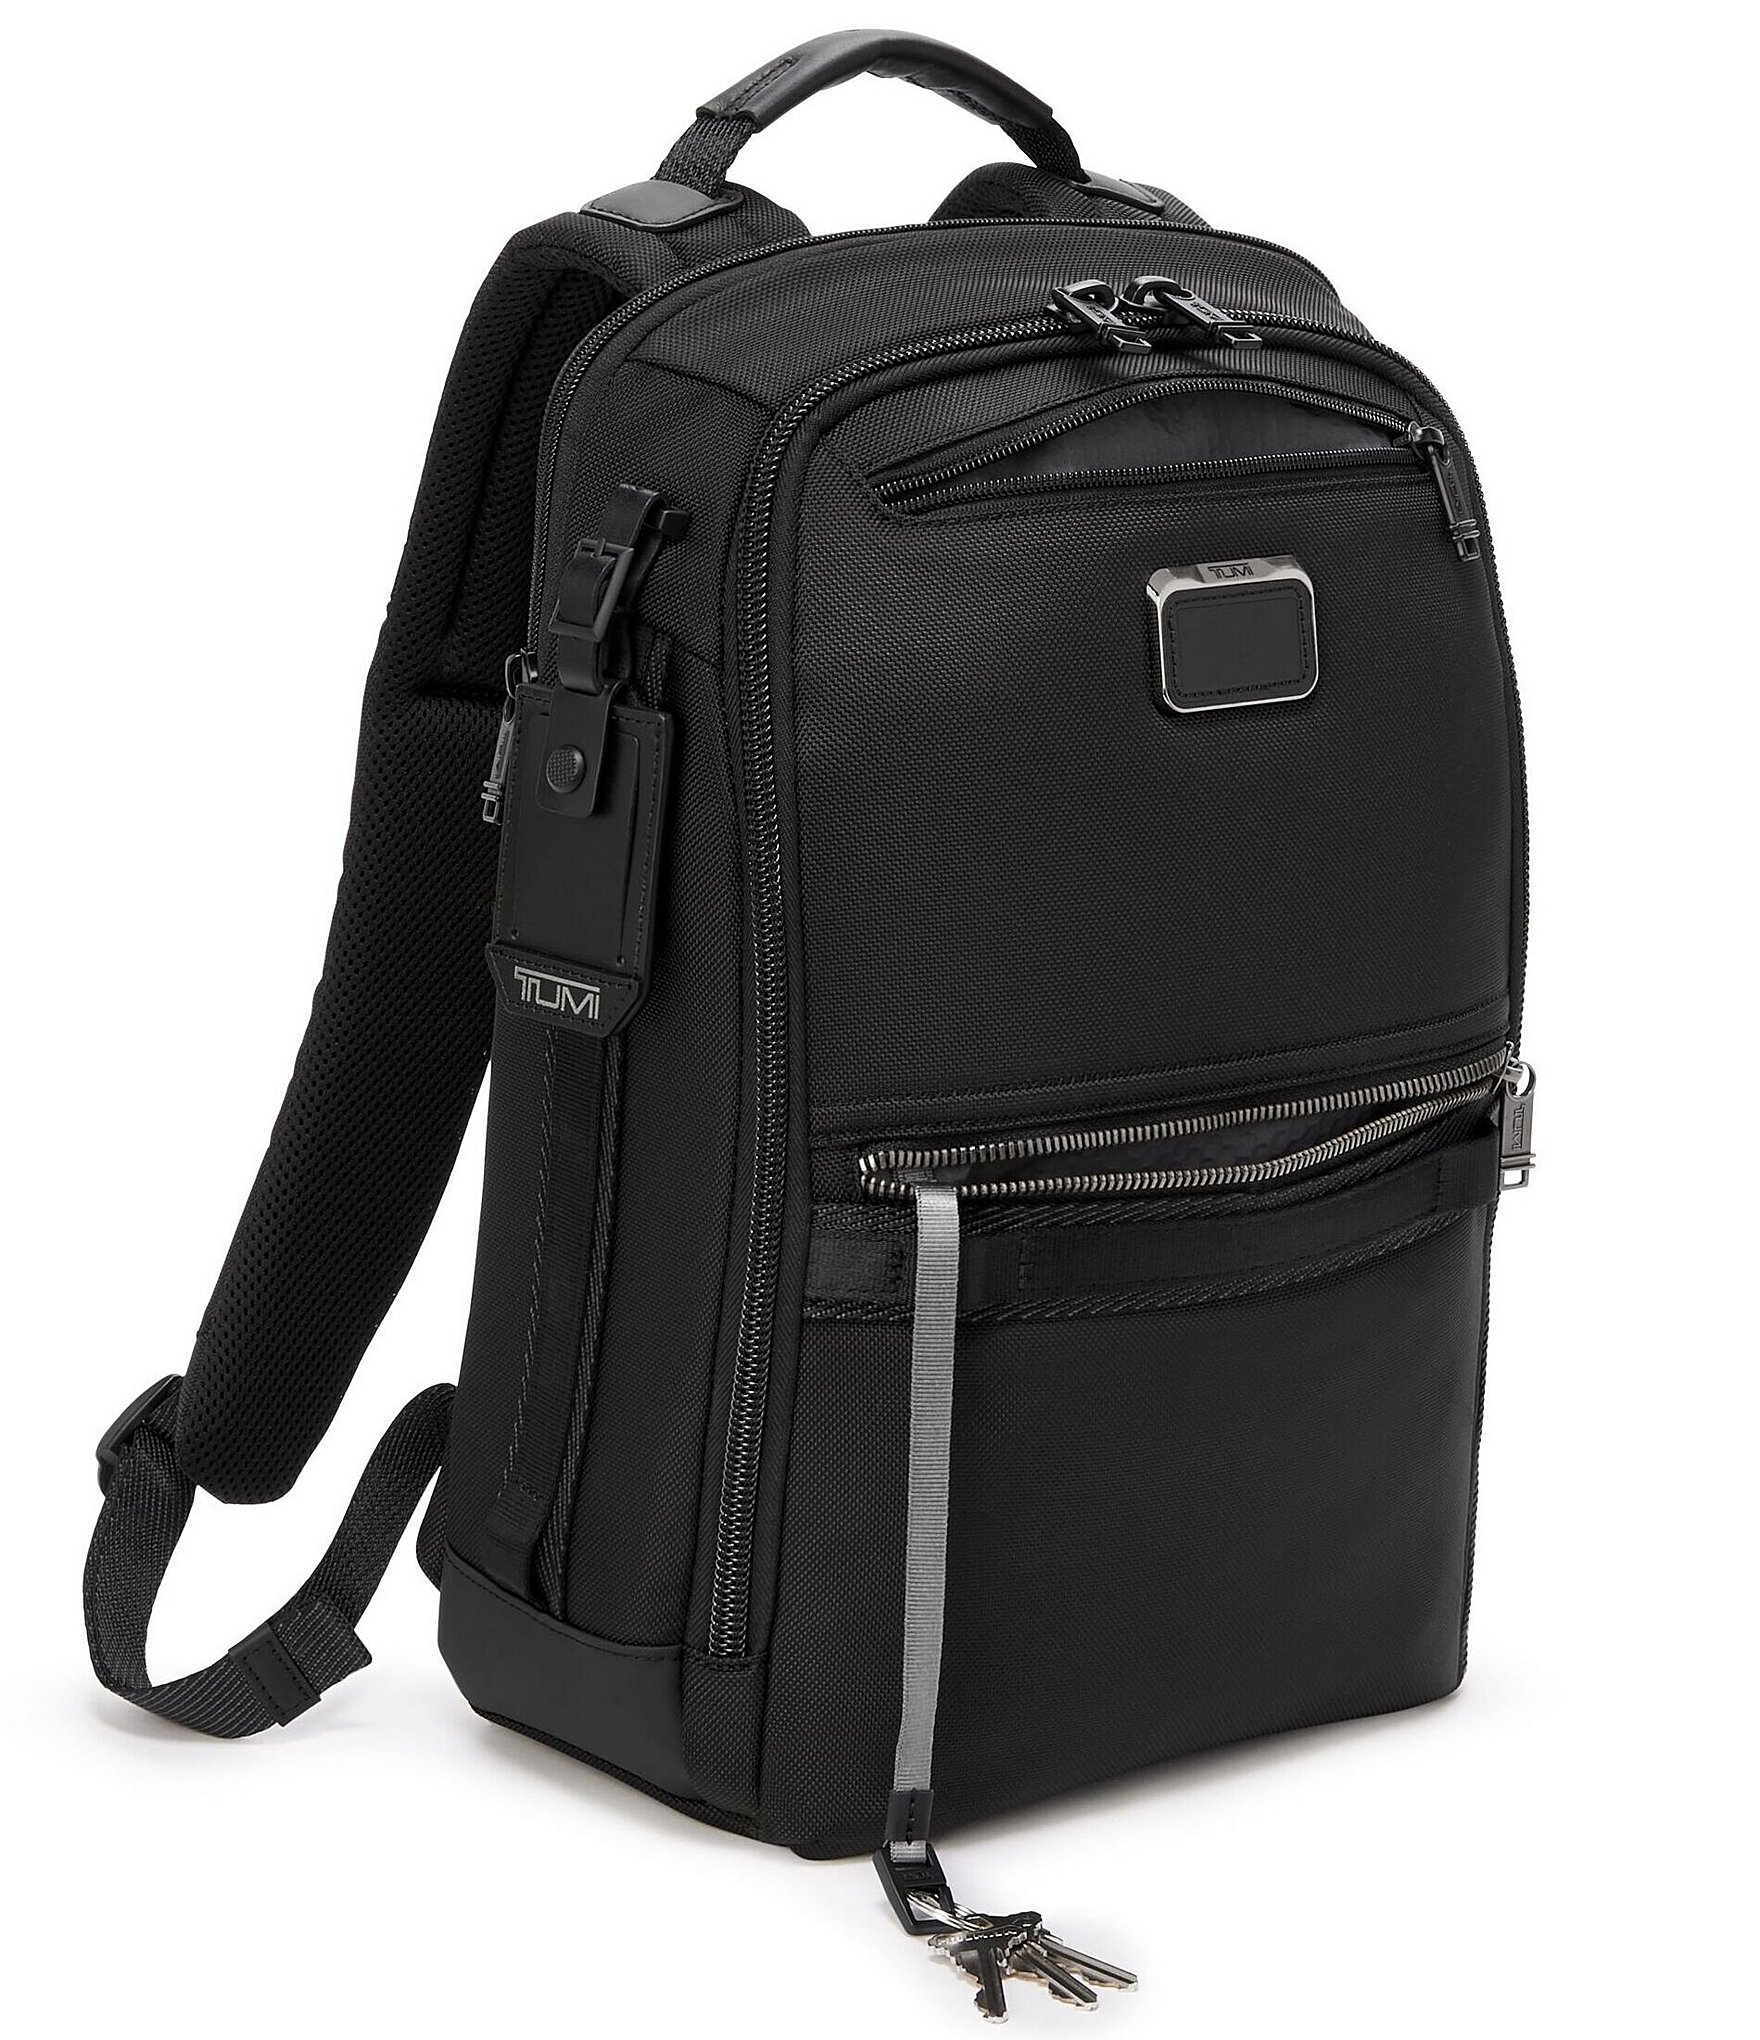 TUMI Alpha Bravo backpack $300 OBO for Sale in Boston, MA